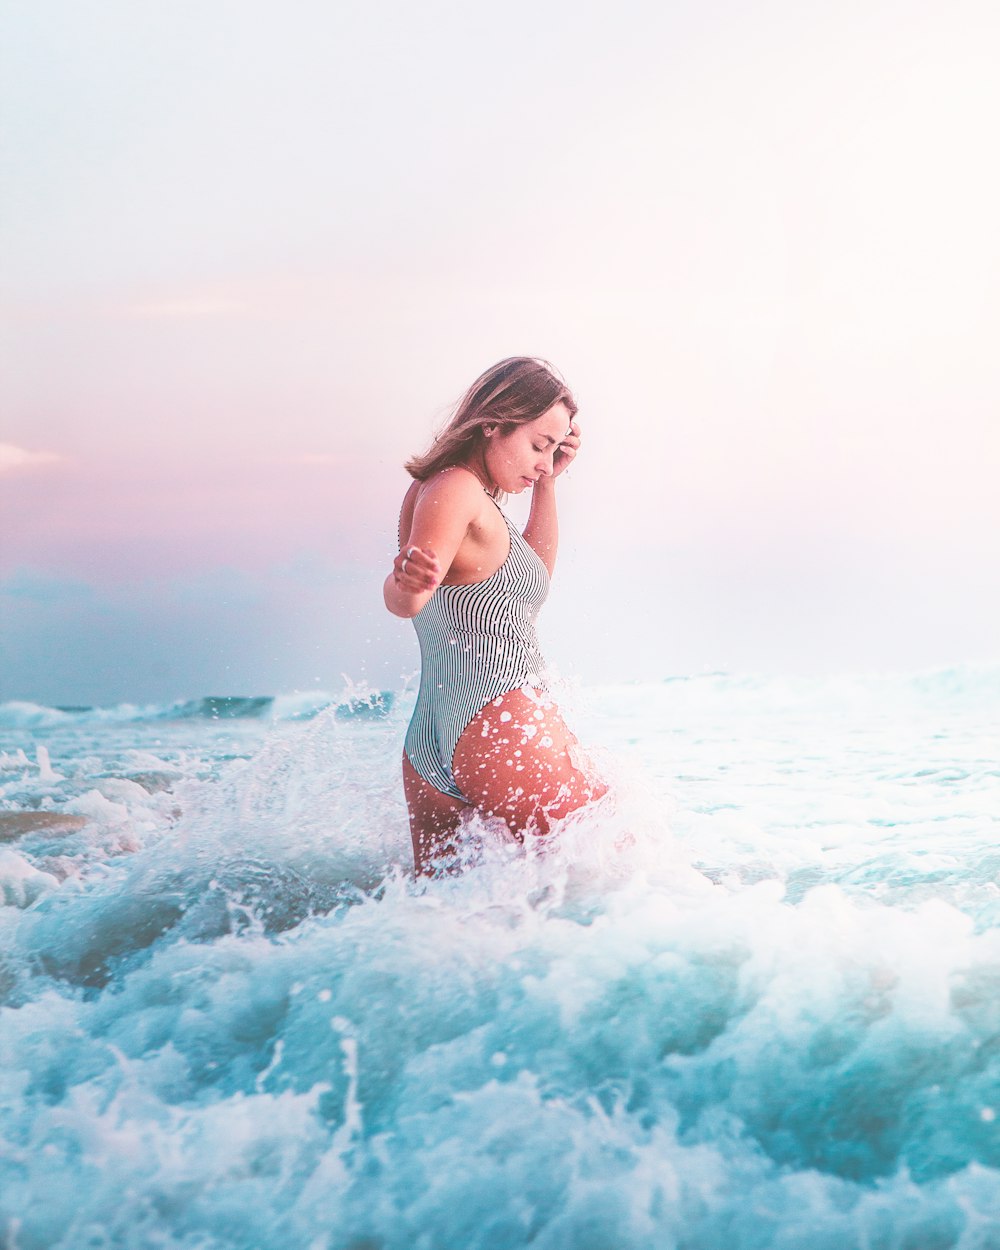 woman in white and black polka dot bikini standing on sea waves during daytime